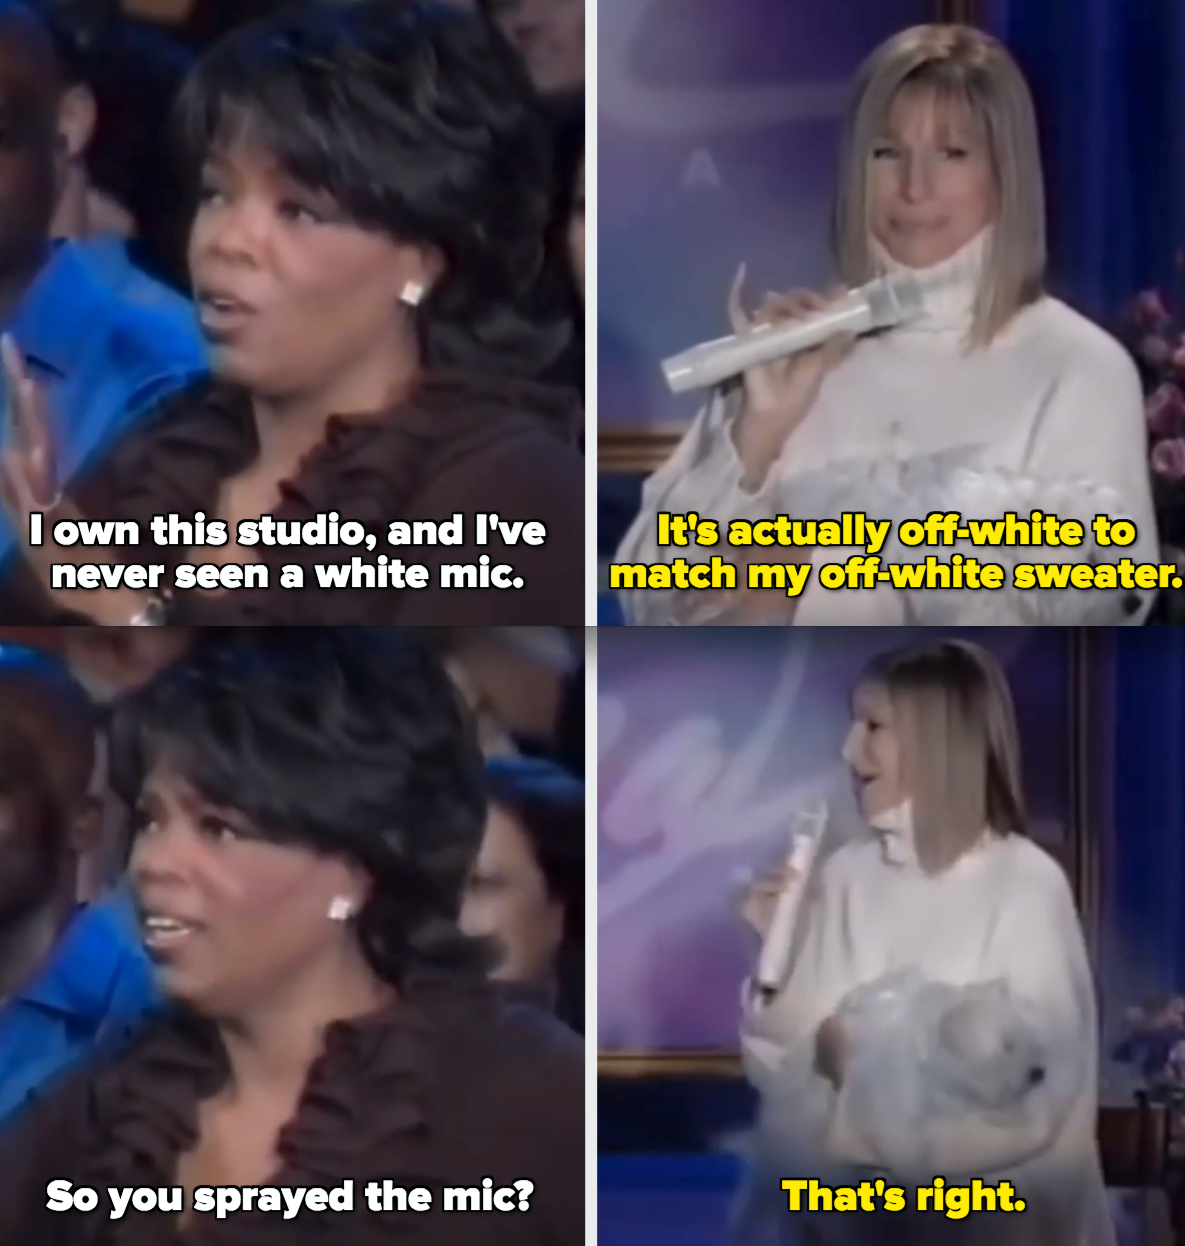 Barbara Streisand admitting to spray painting her mic white to match her sweater